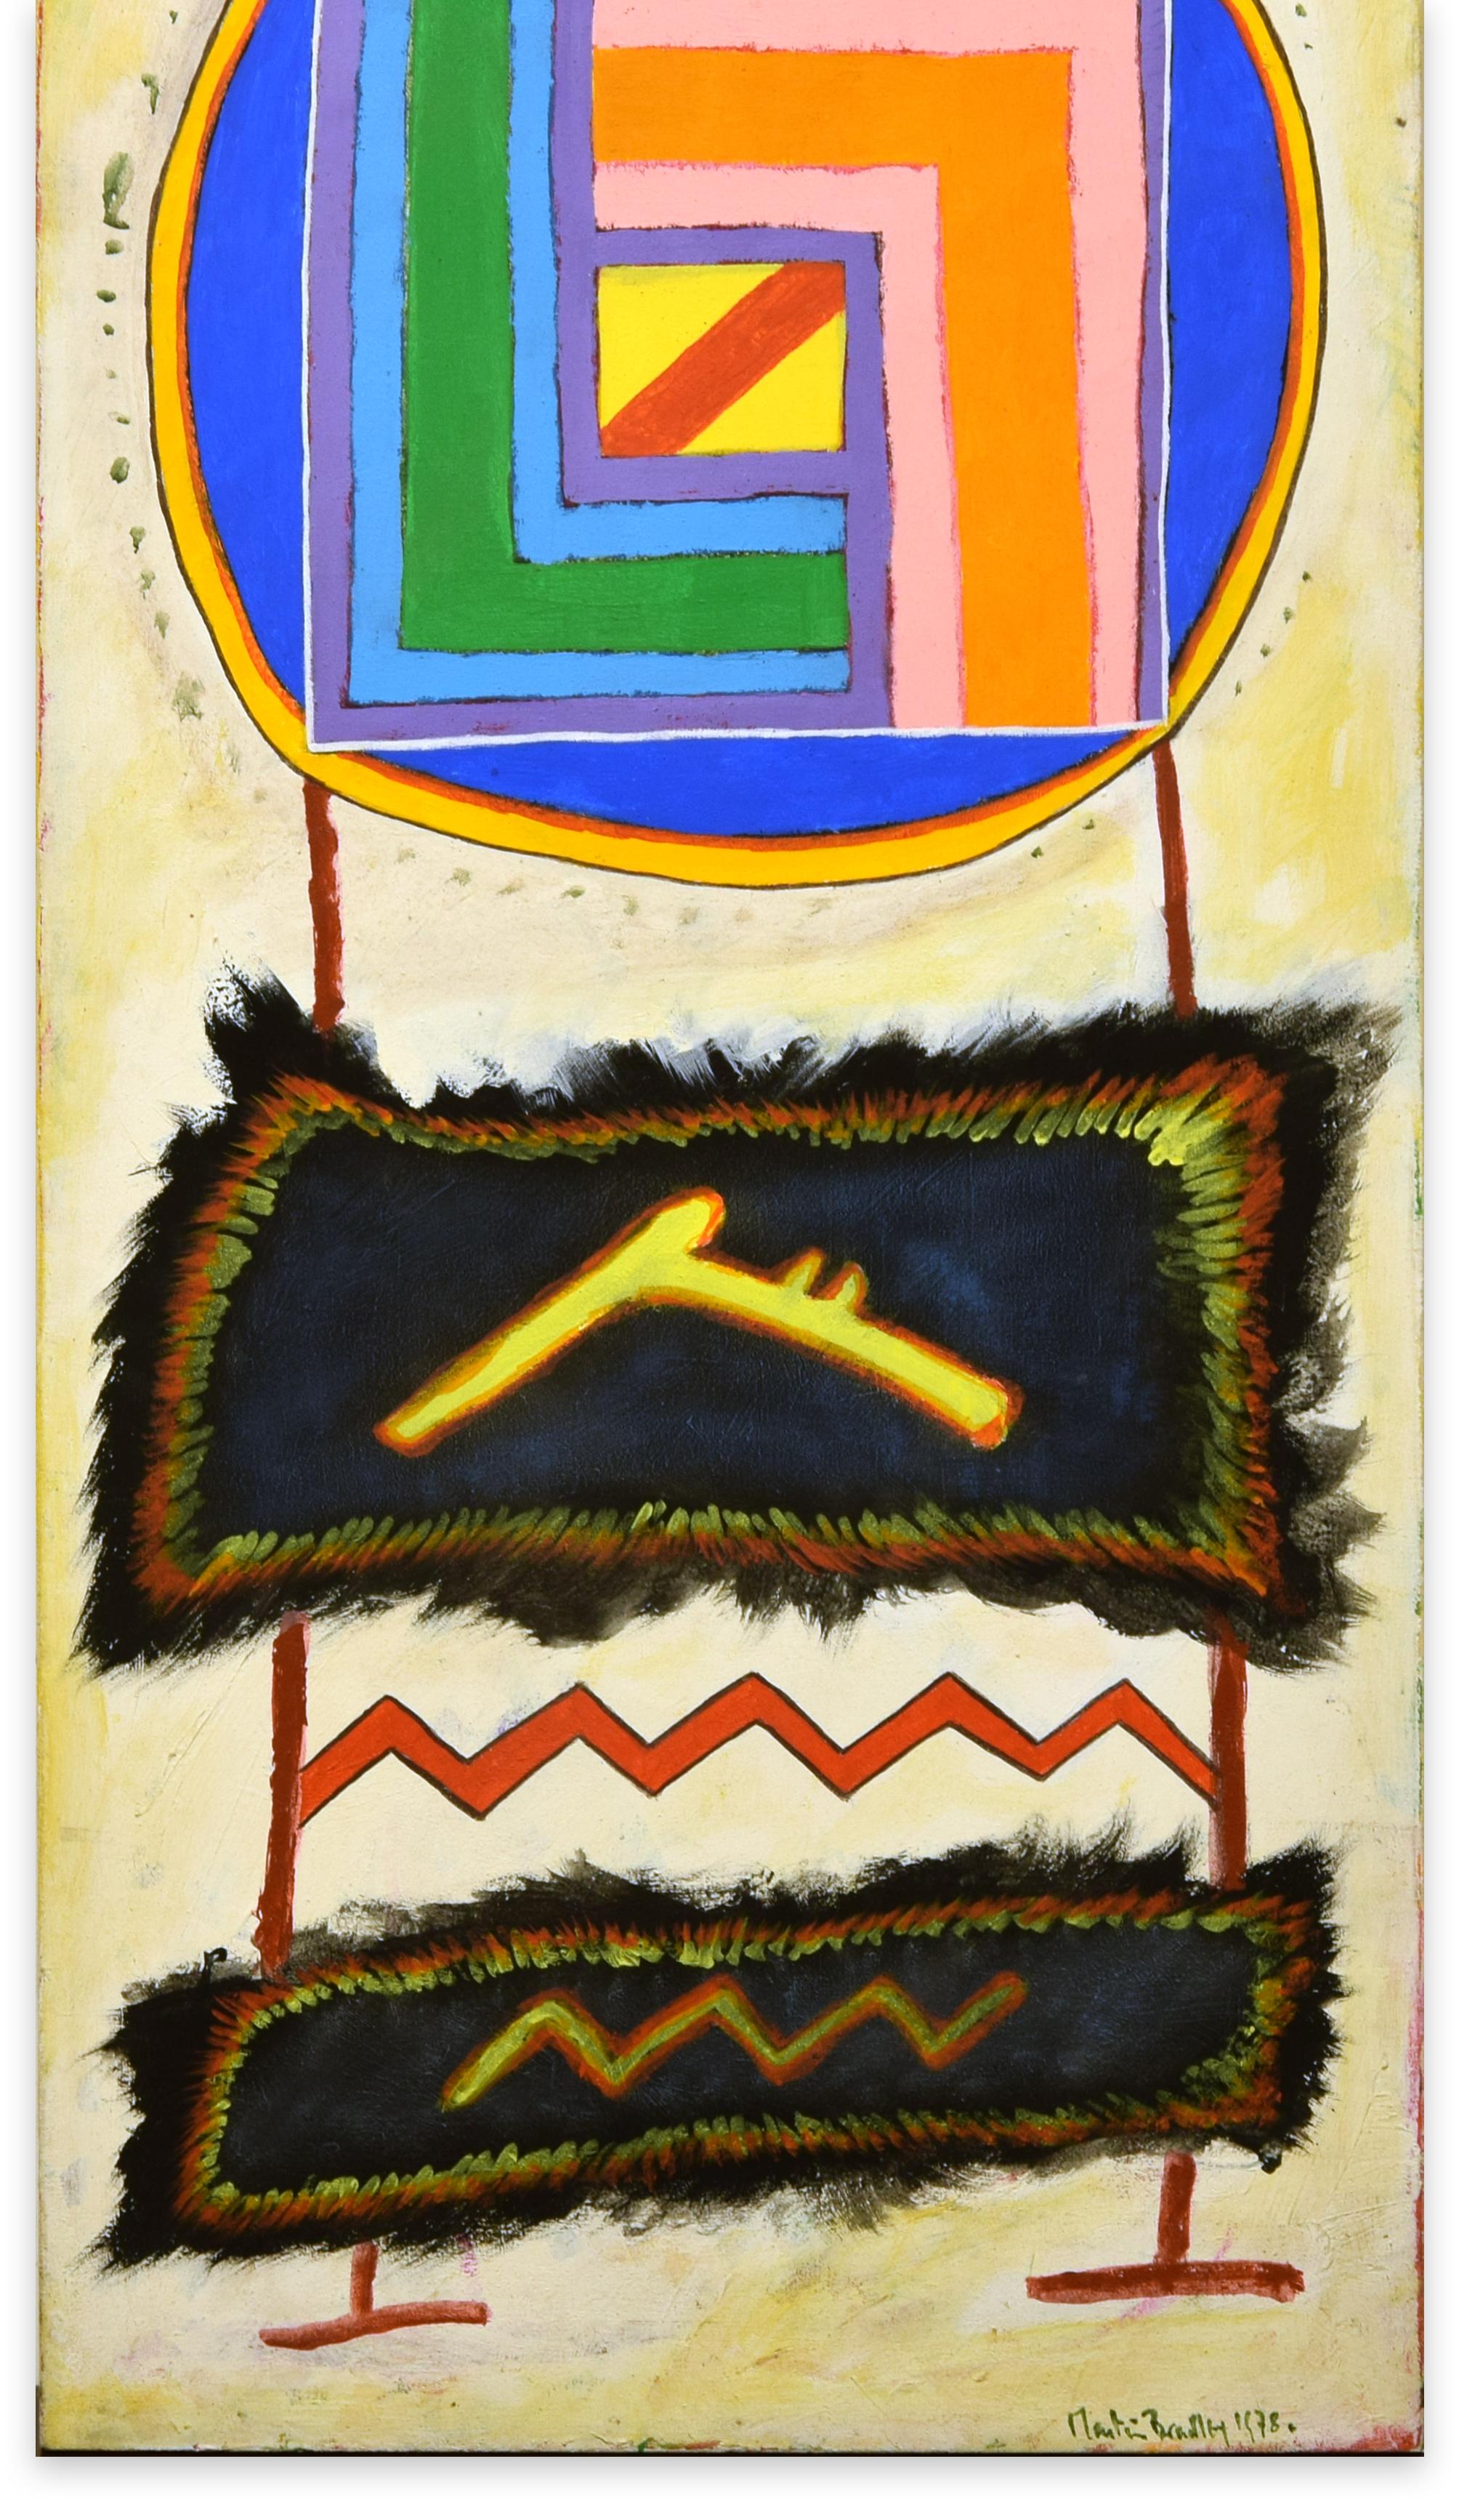 Goat Spirit - Mixed Media on Canvas by Martin Bradley - 1978 1